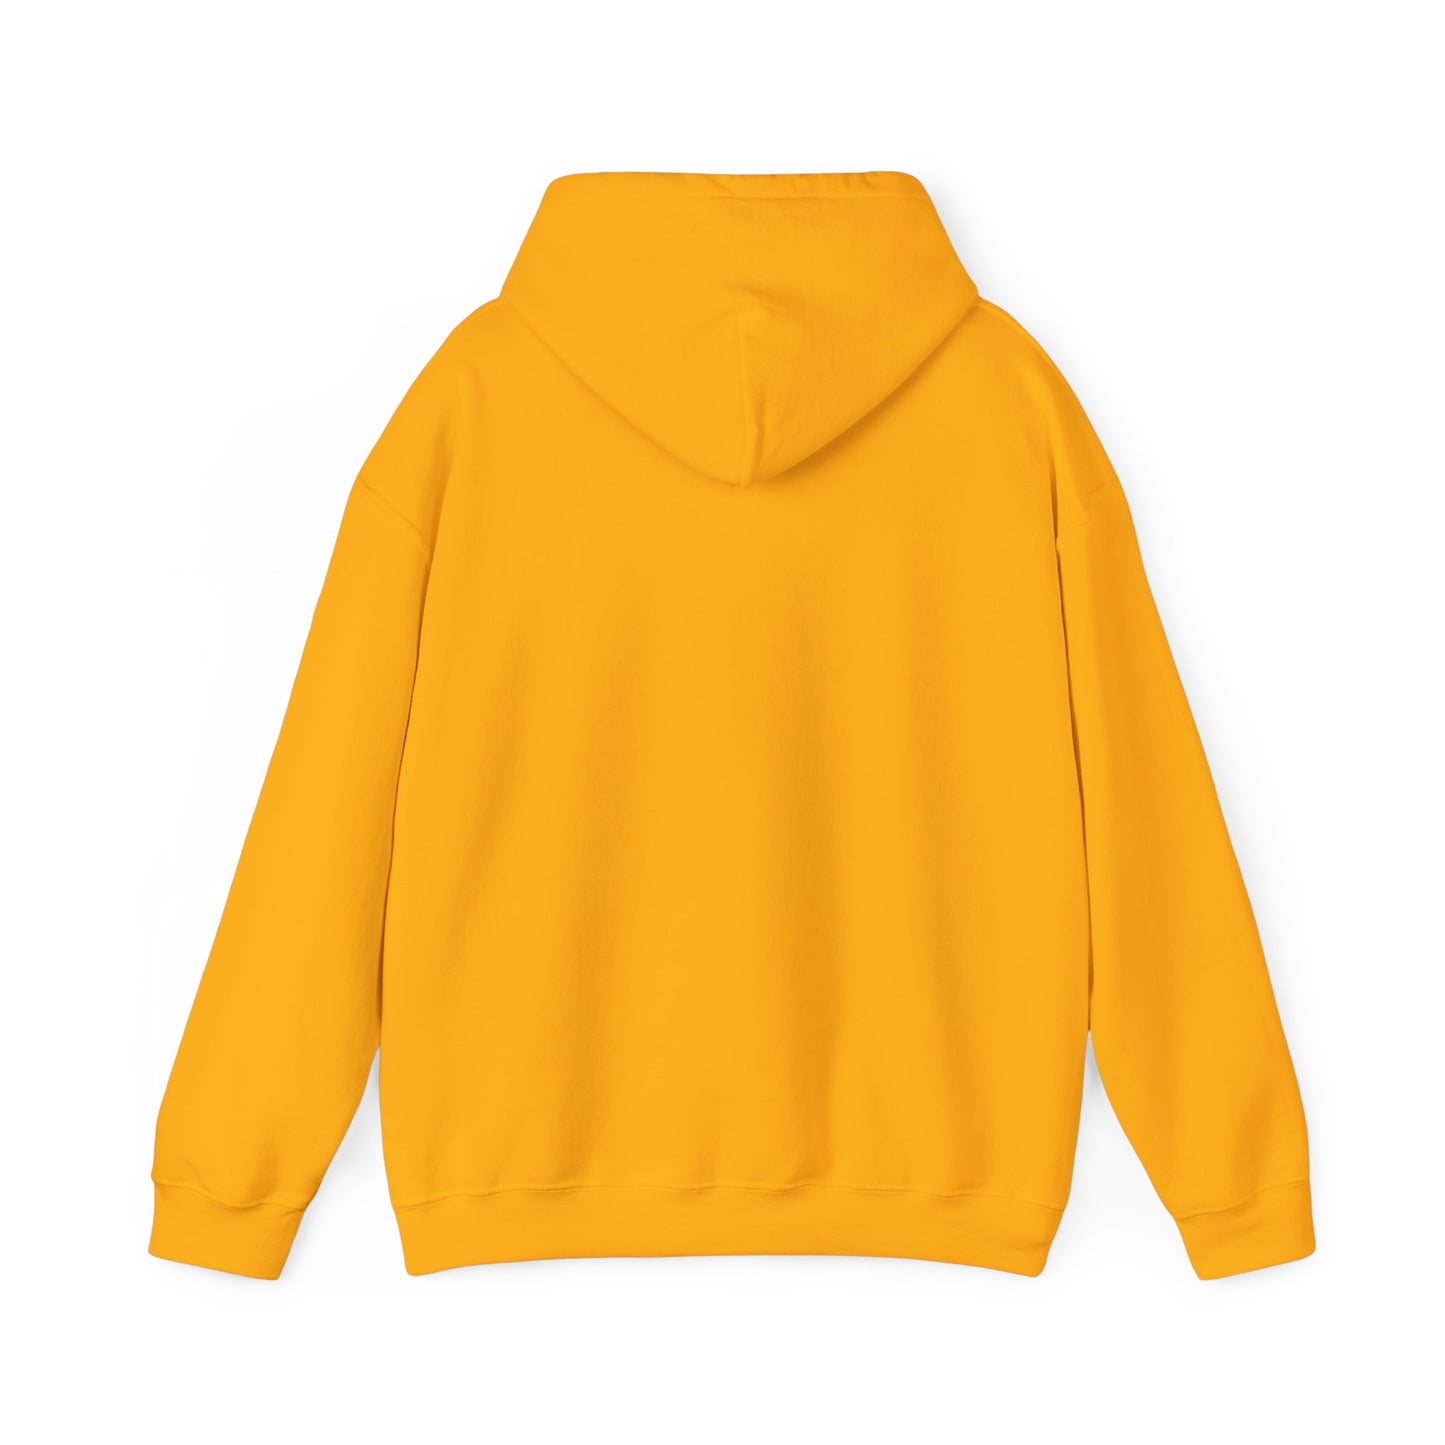 Golf Cutout - Gildan Unisex Heavy Blend™ Hooded Sweatshirt